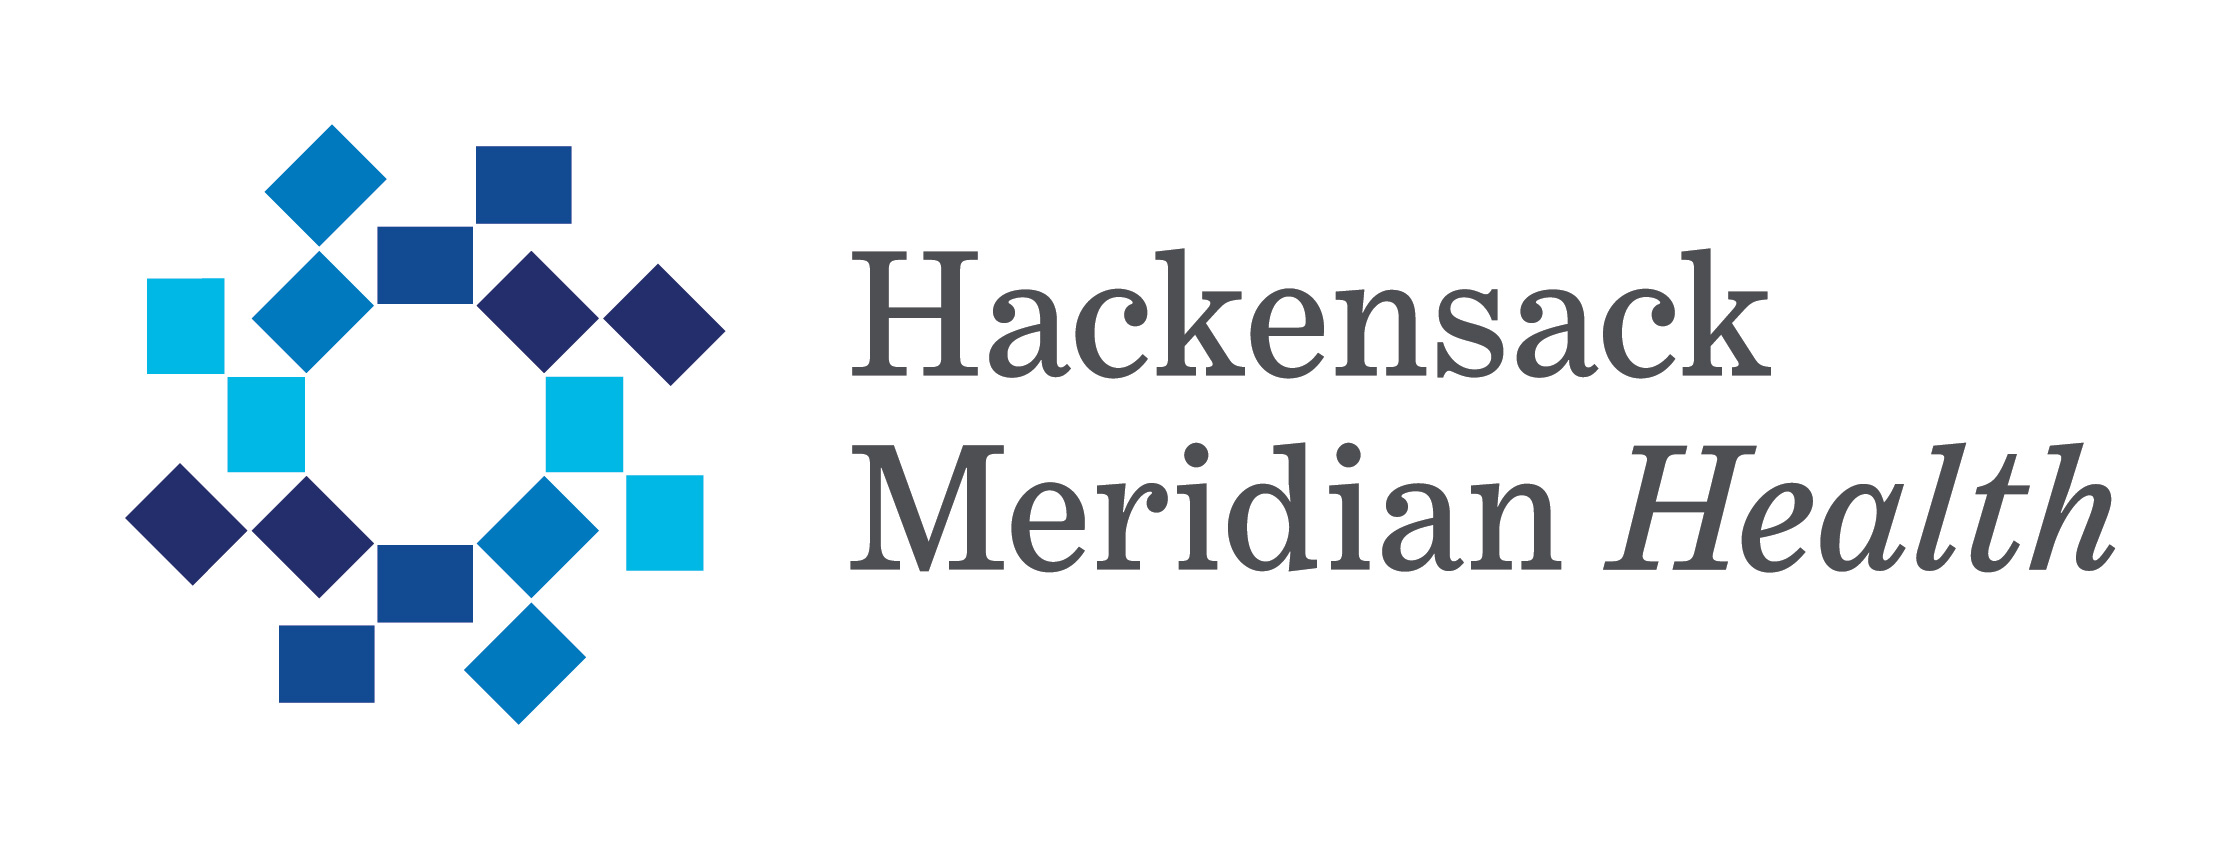 Hackensack%20Meridian%20Health%20Logo.jpg